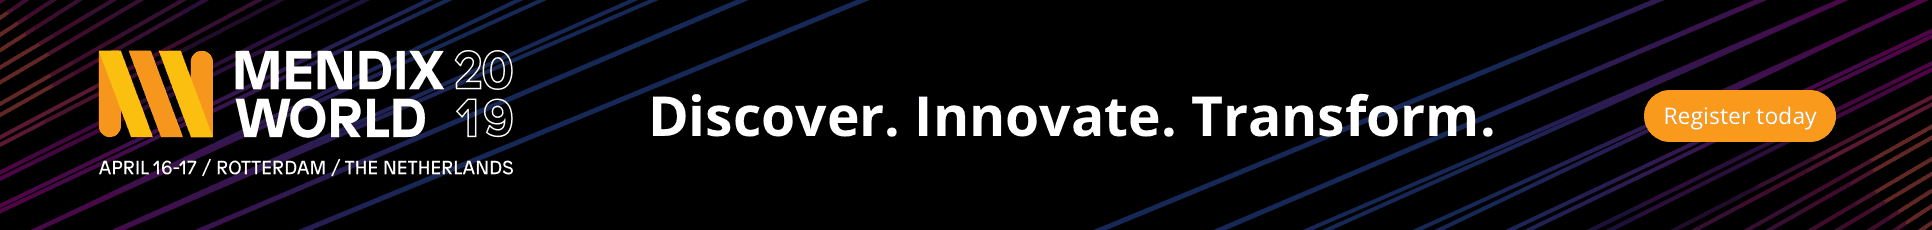 Mendix World 2019 - Discover, Innovate, Transform - Register Today